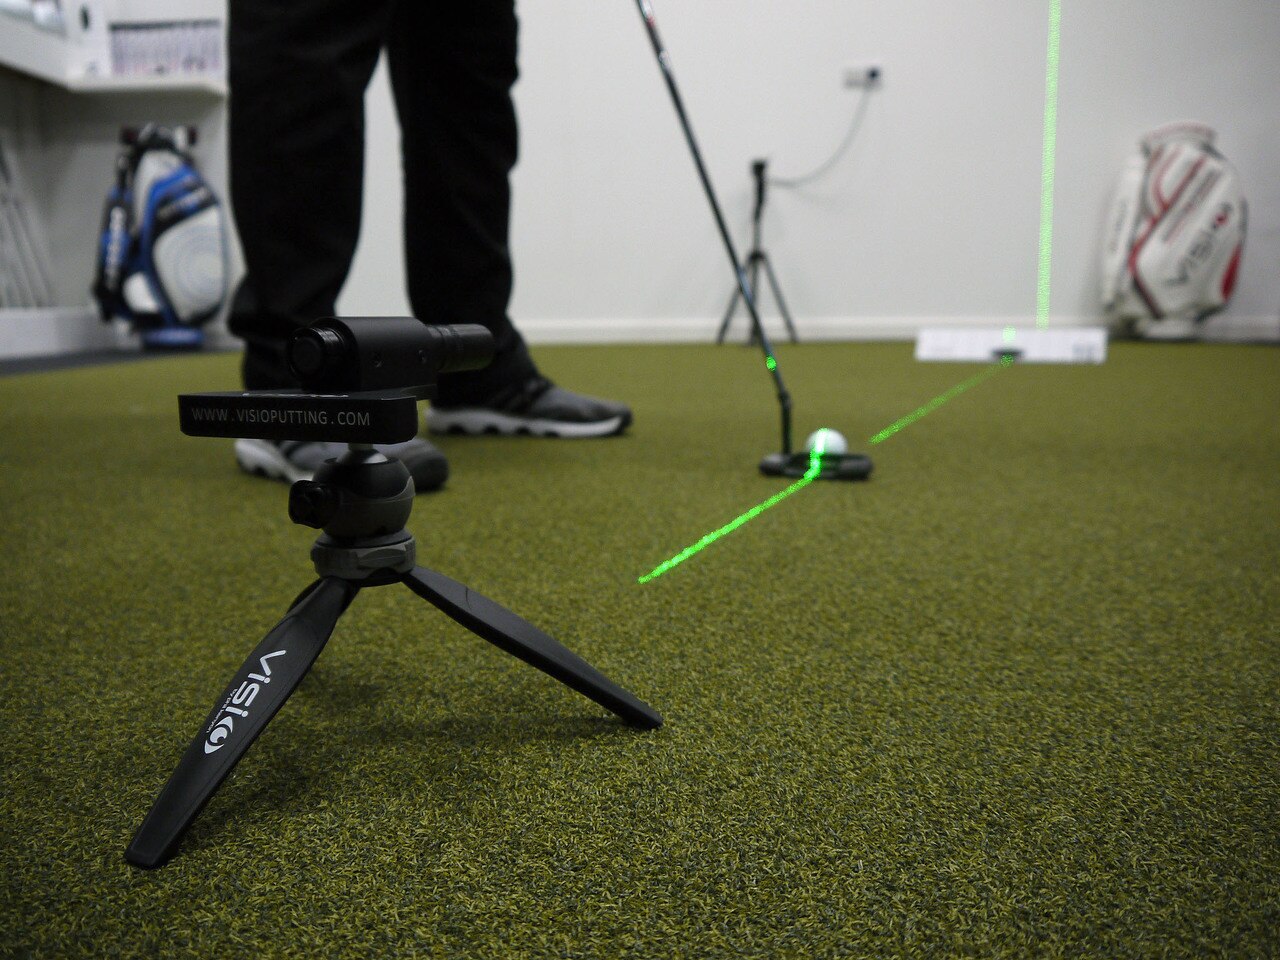 Golfer using laser putting aid